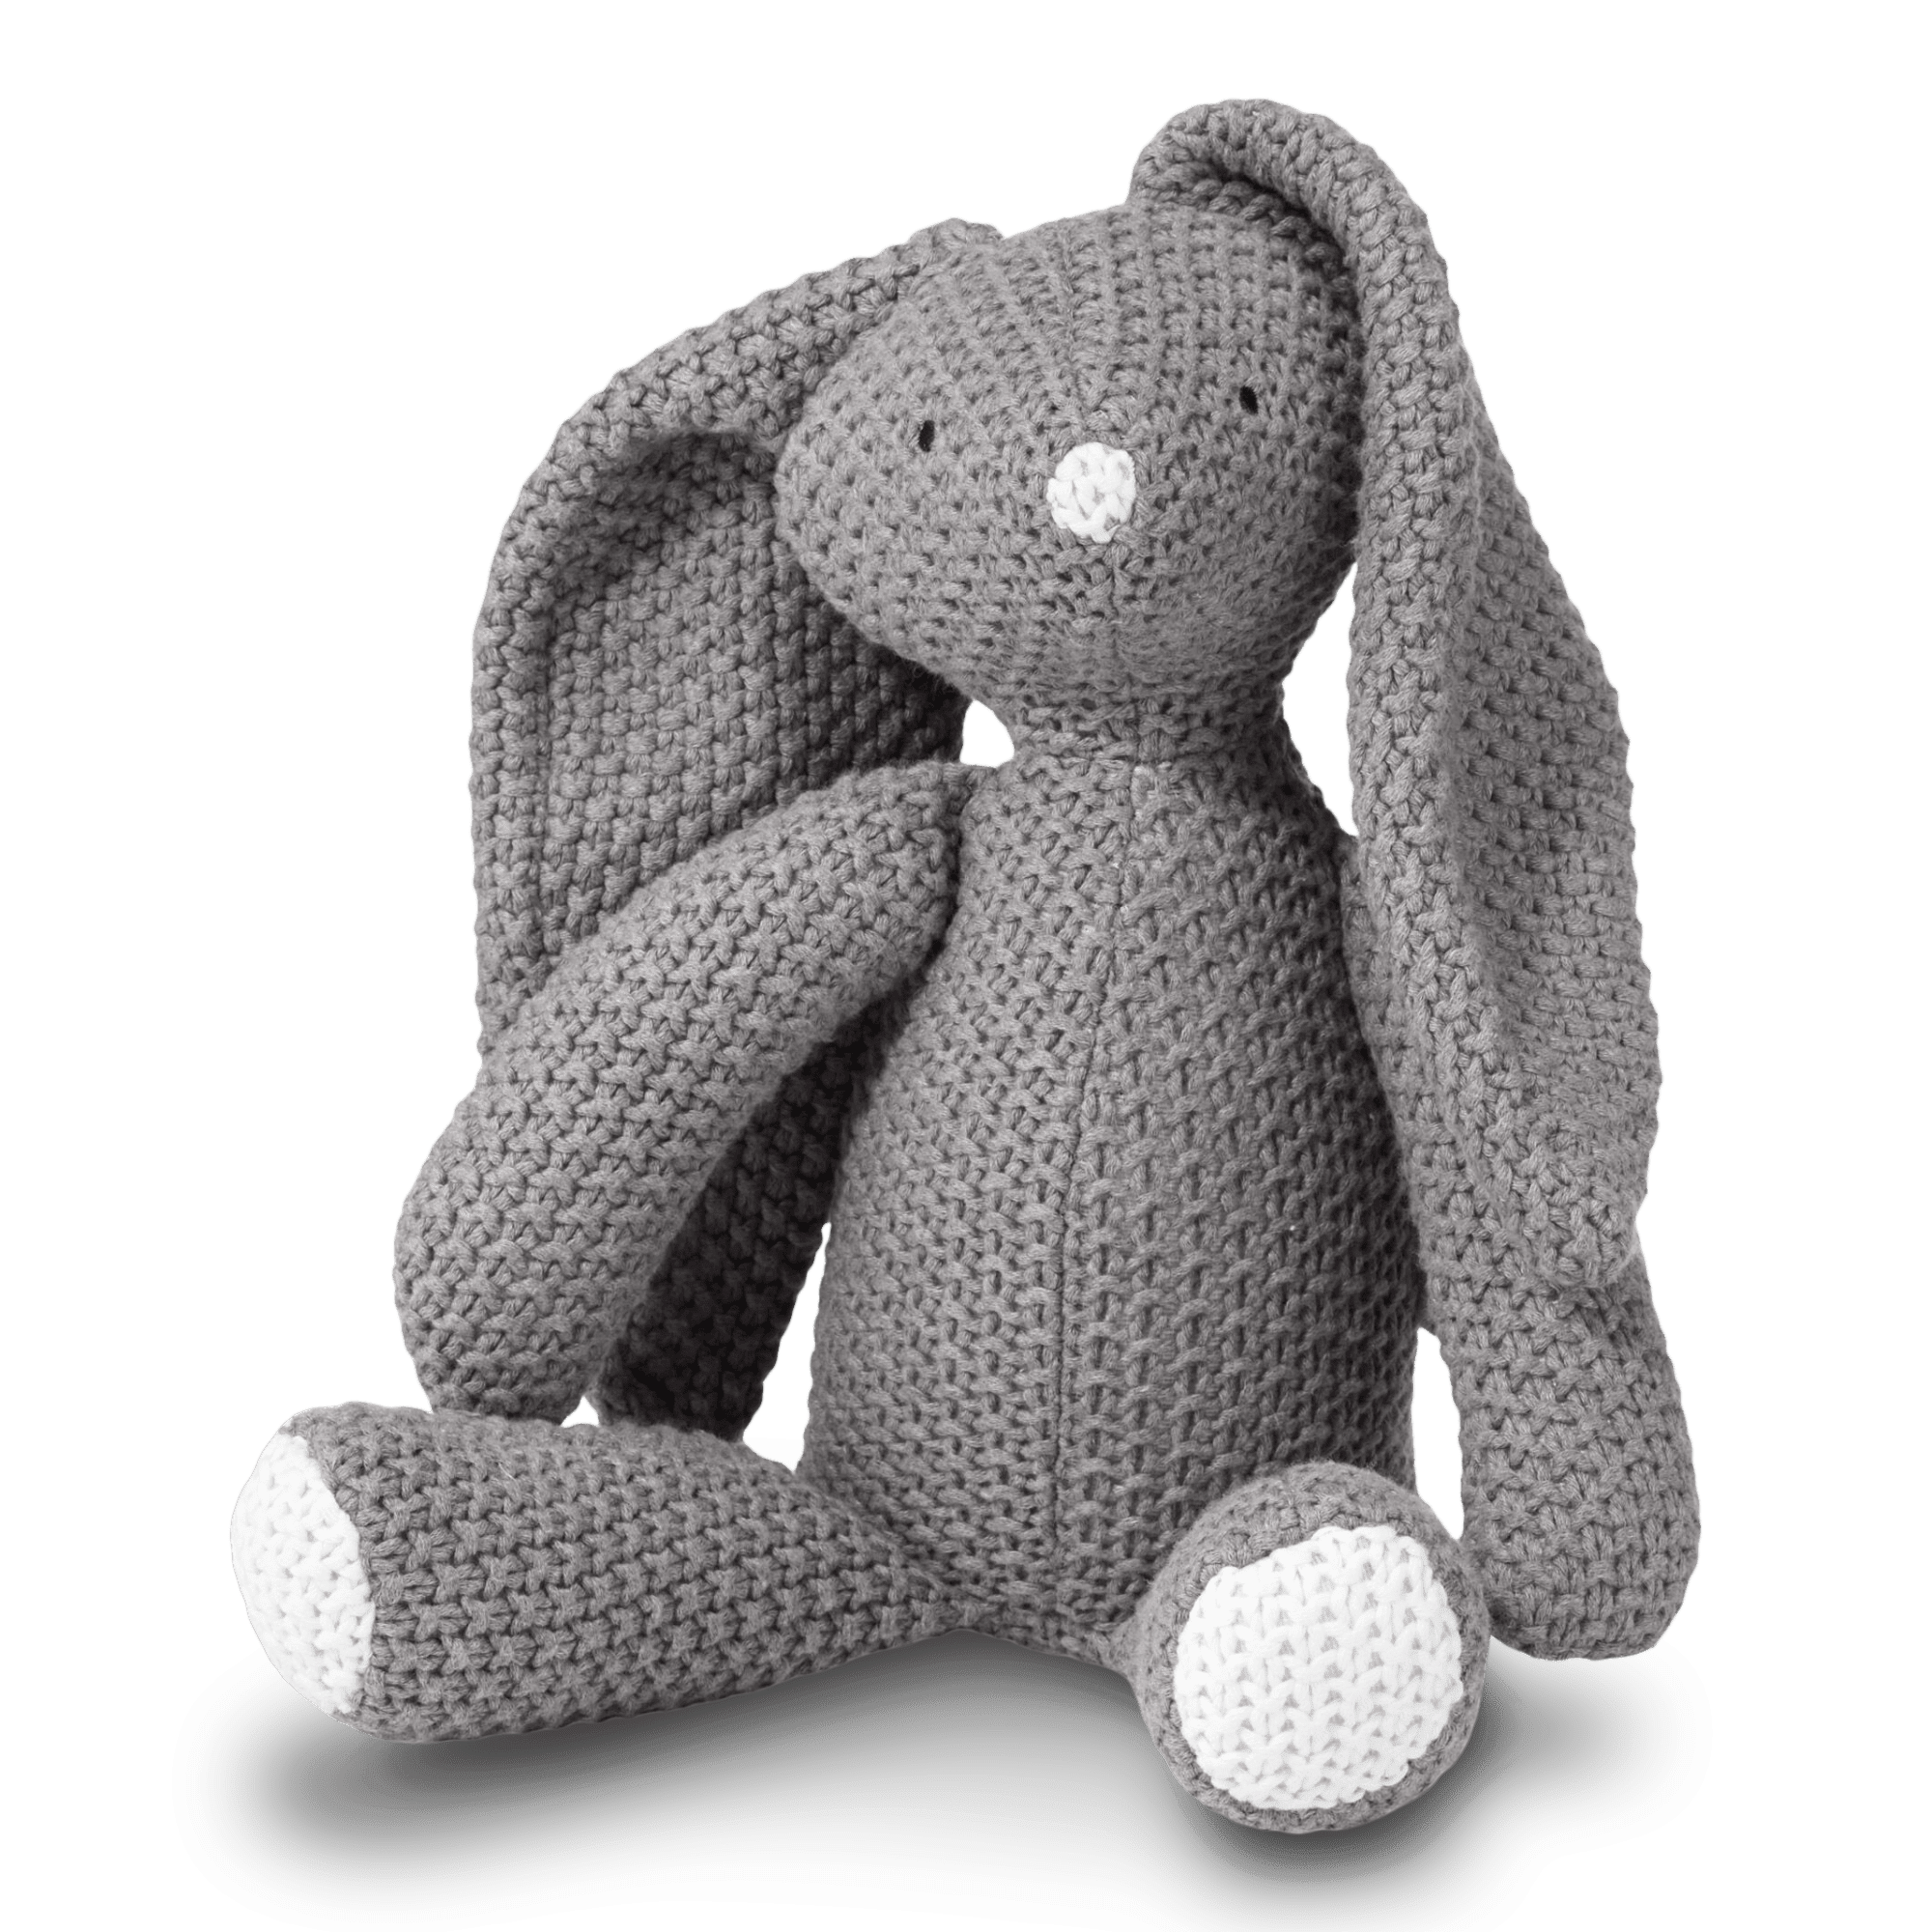 Bunny Knitted Stuffed Animal